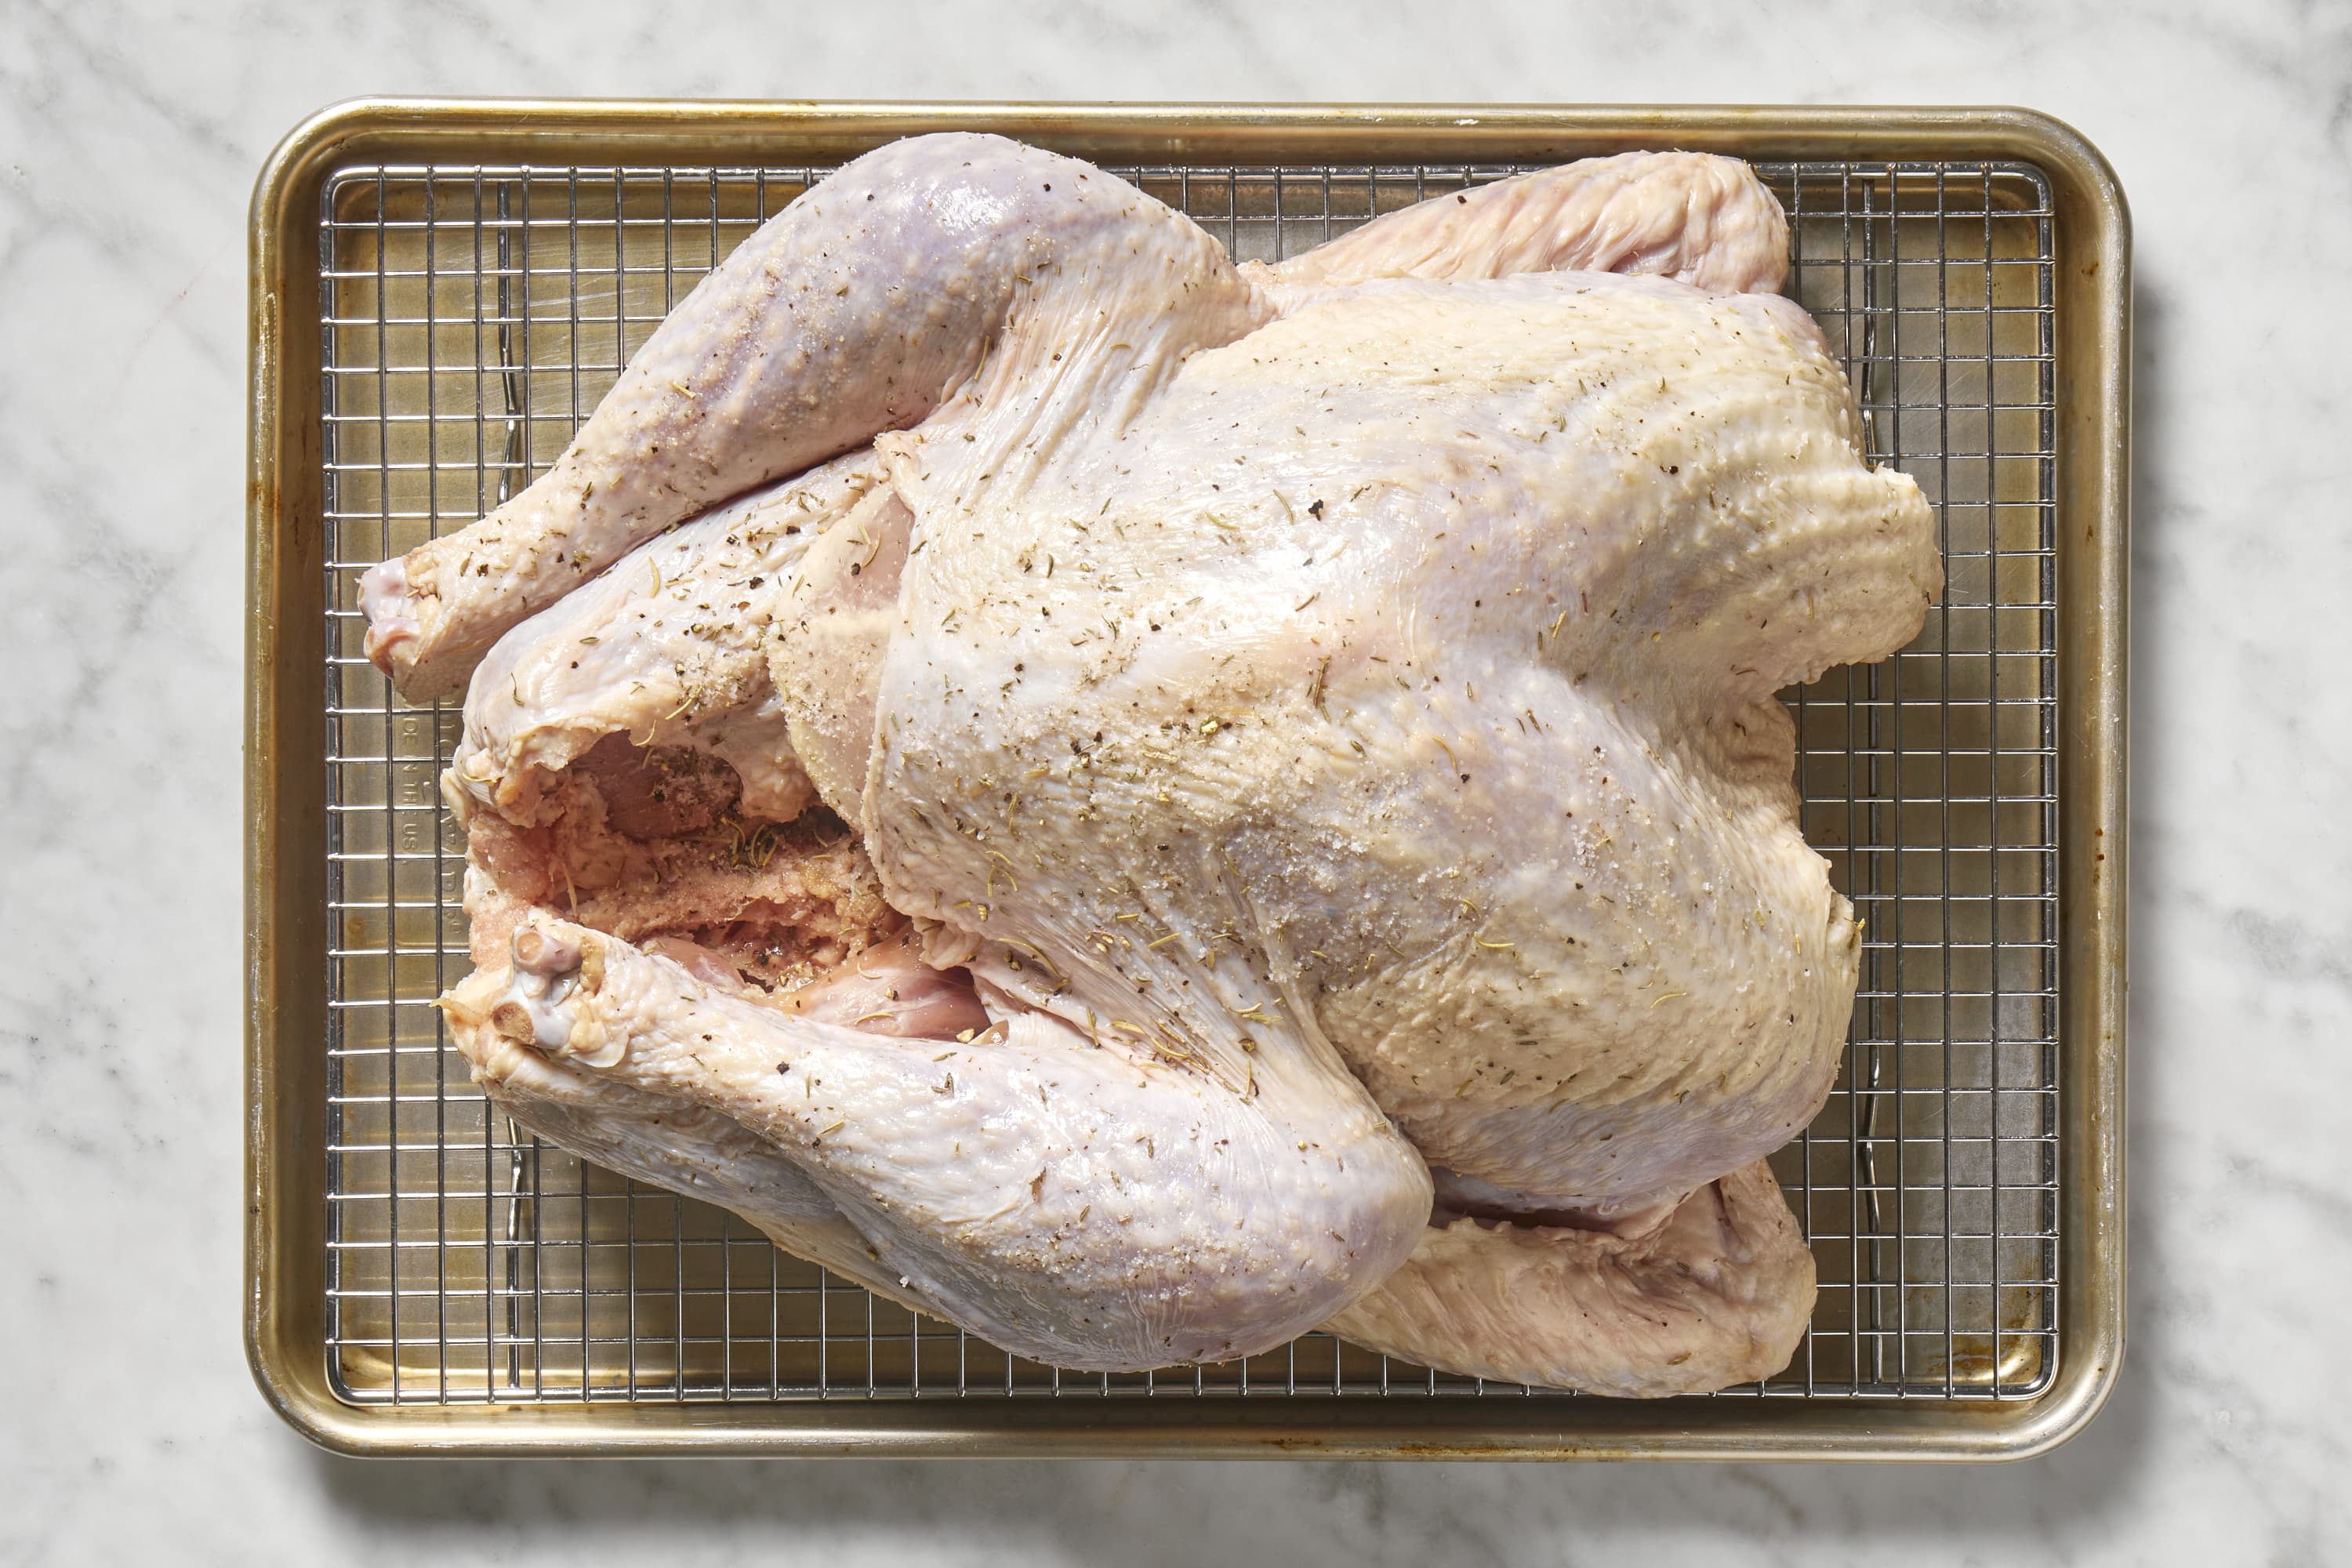 How to Dry-Brine and Roast a Turkey